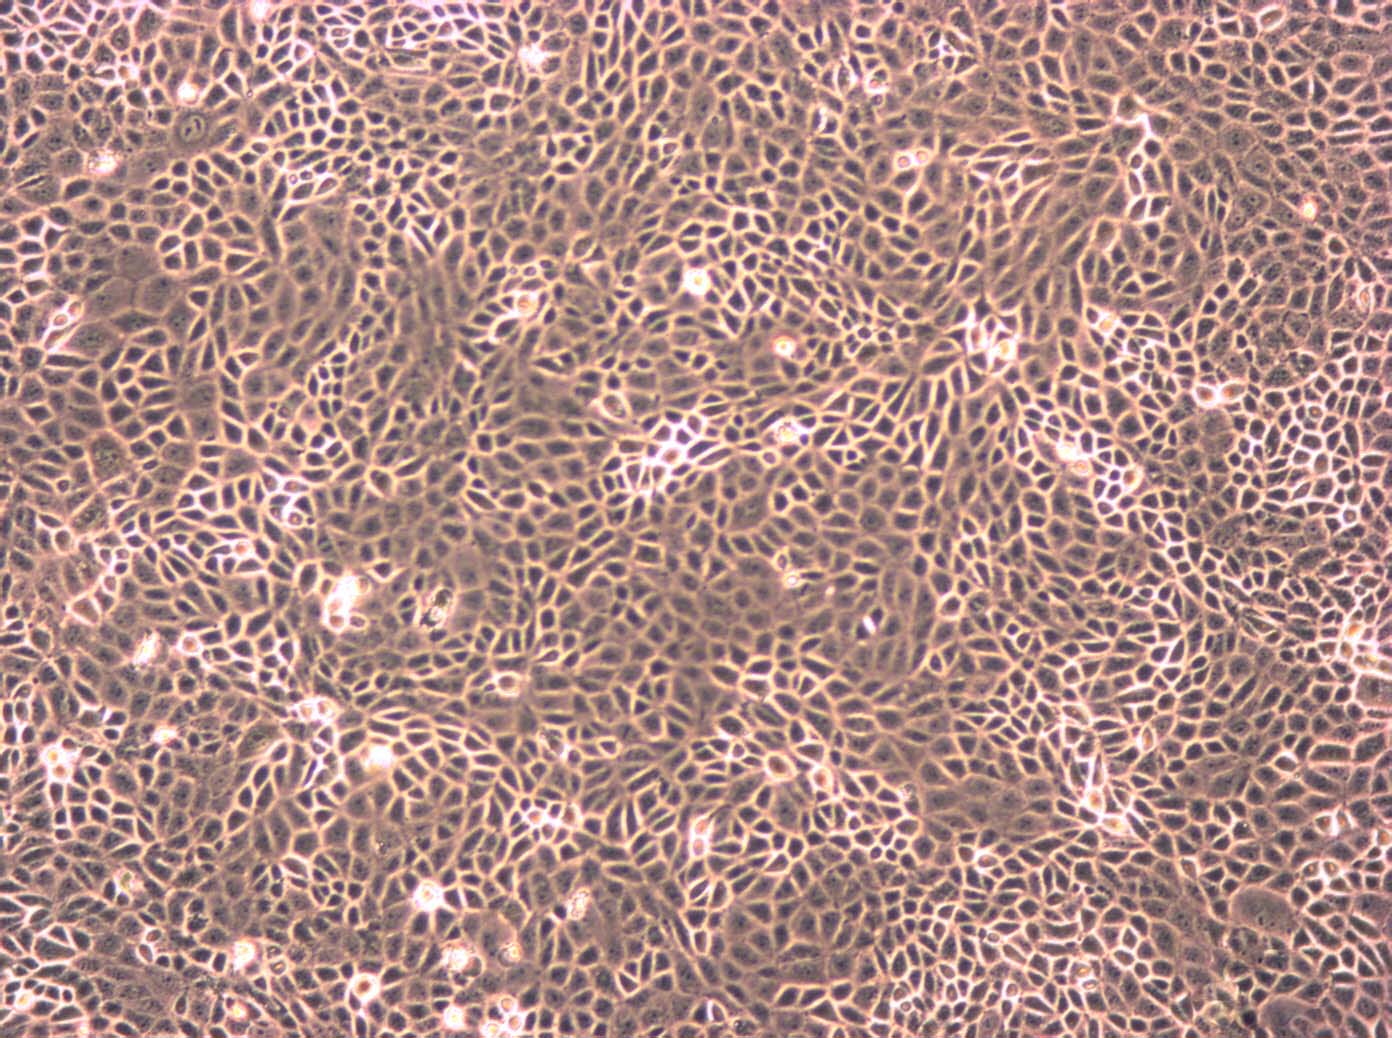 CHP-212 epithelioid cells人脑神经母细胞瘤细胞系